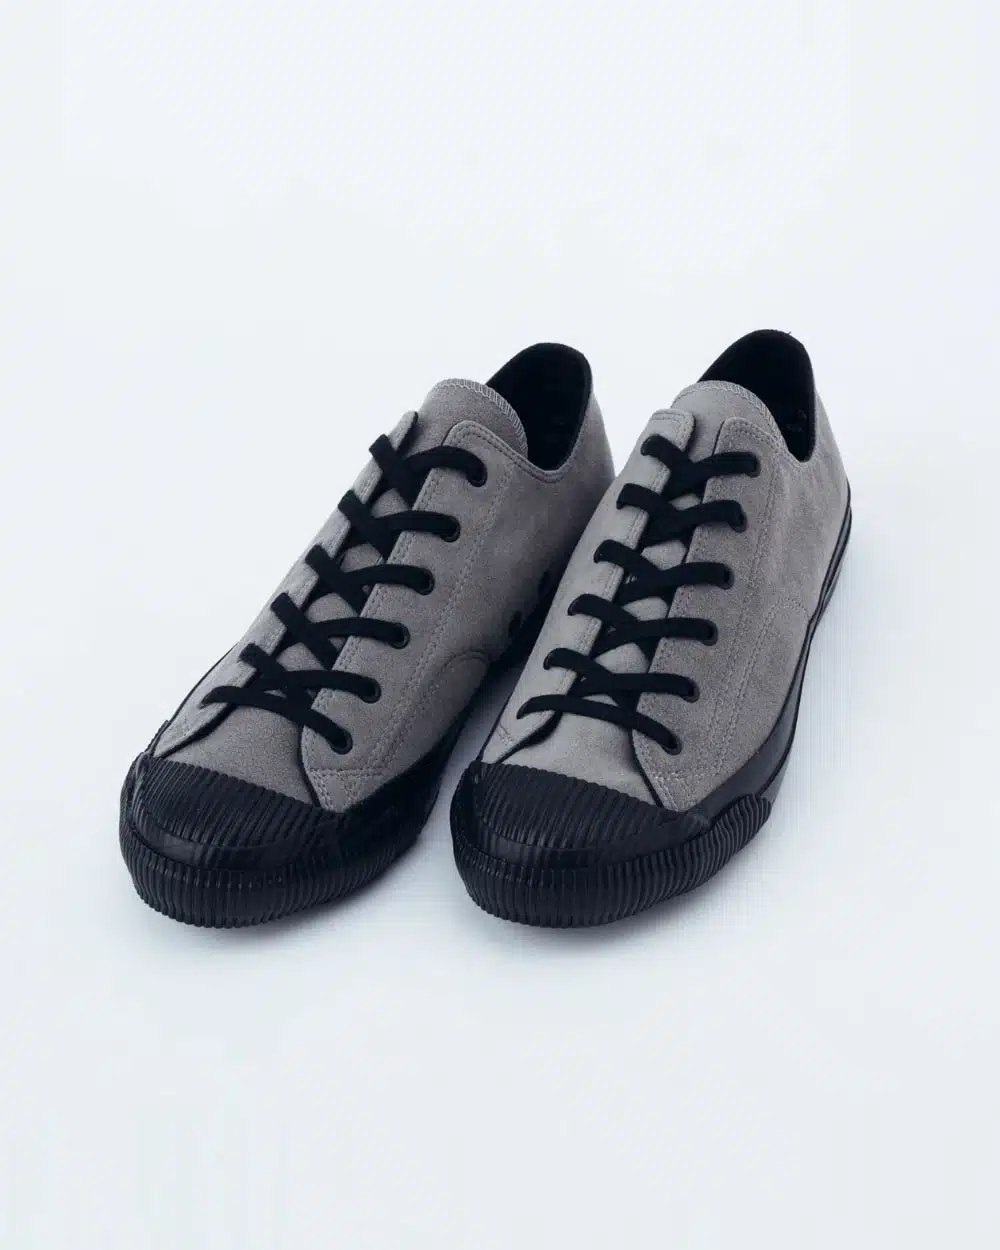 PRAS Shellcap Low Sneakers - Grey Vegan Suede/Black